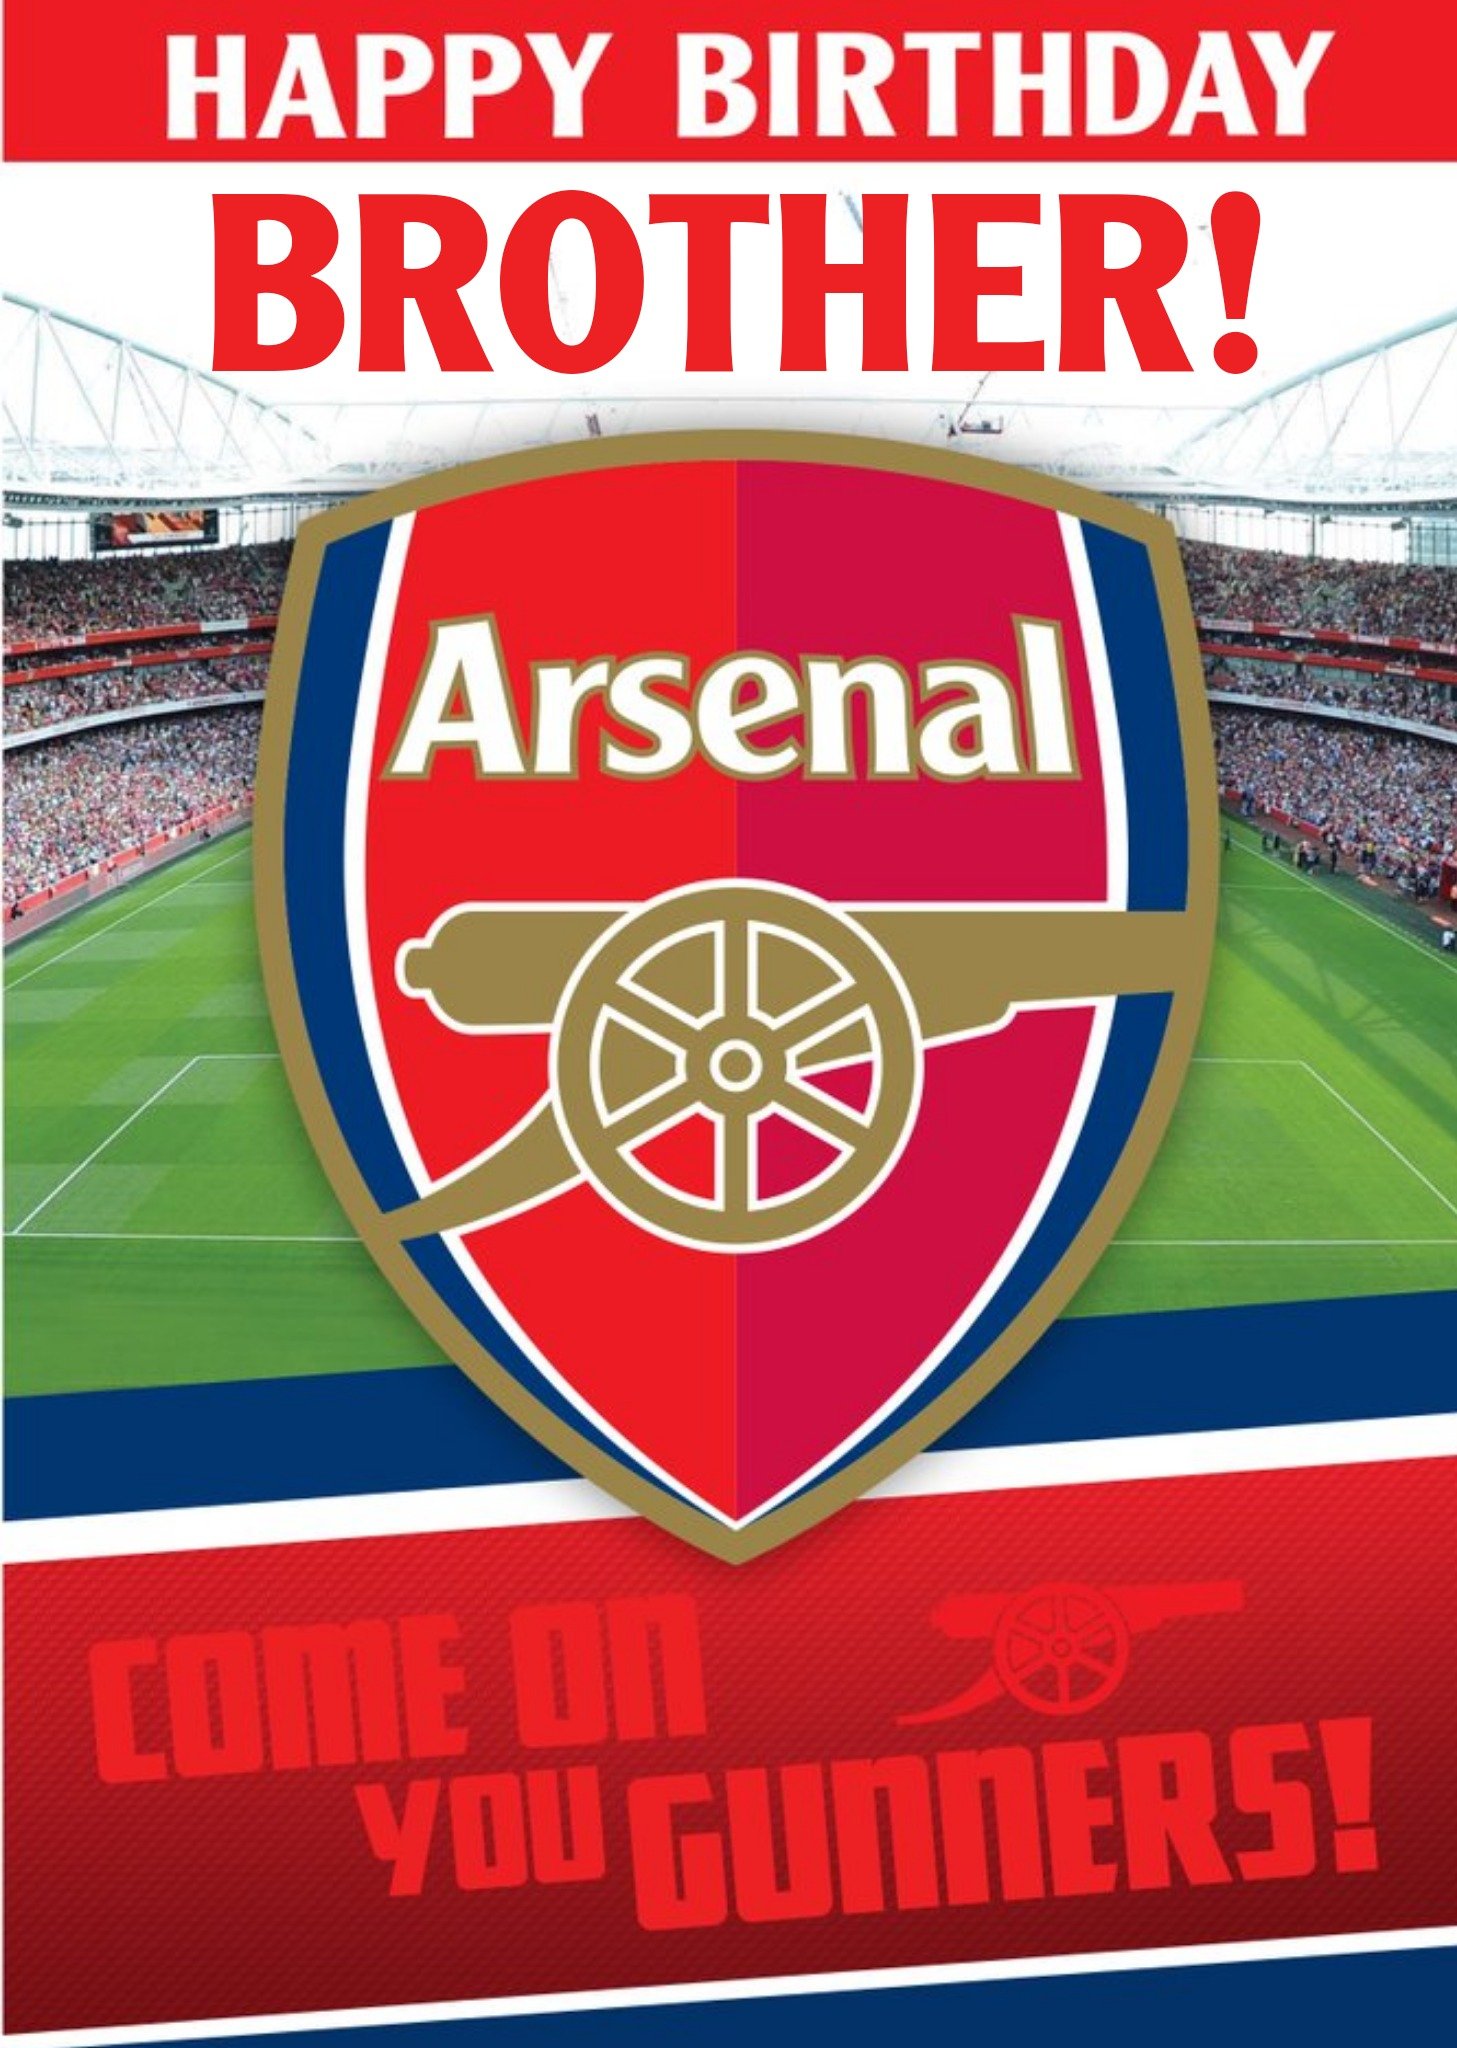 Arsenal Football Stadium Come On You Gunners Brother Happy Birthday Card Ecard